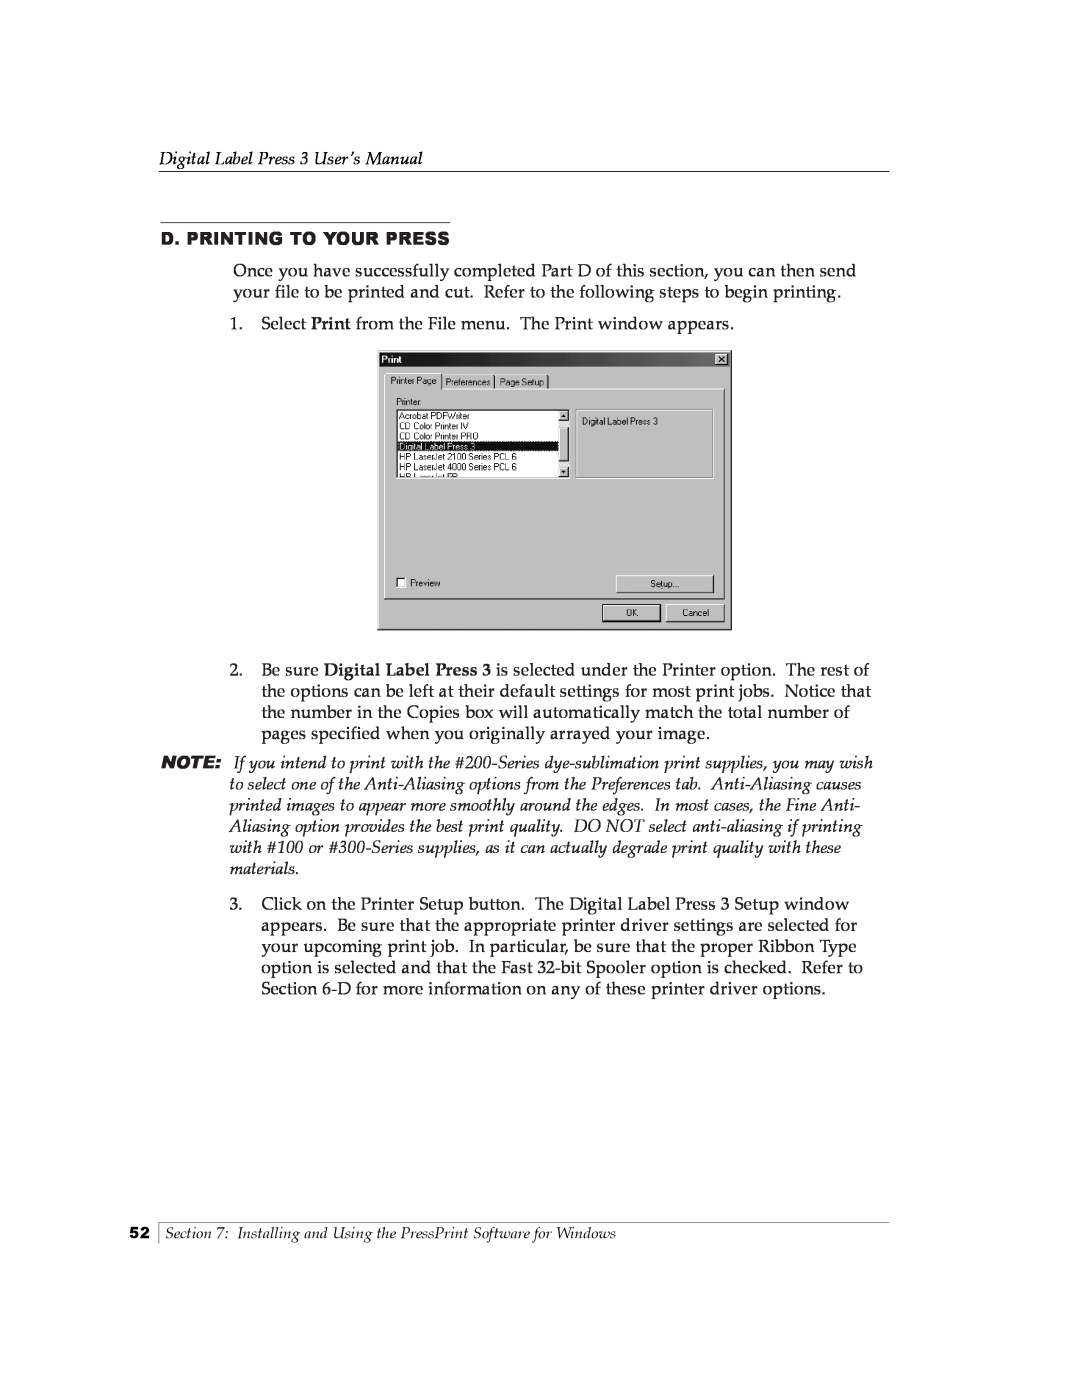 Primera Technology 510212 manual D. Printing To Your Press, Digital Label Press 3 User’s Manual 